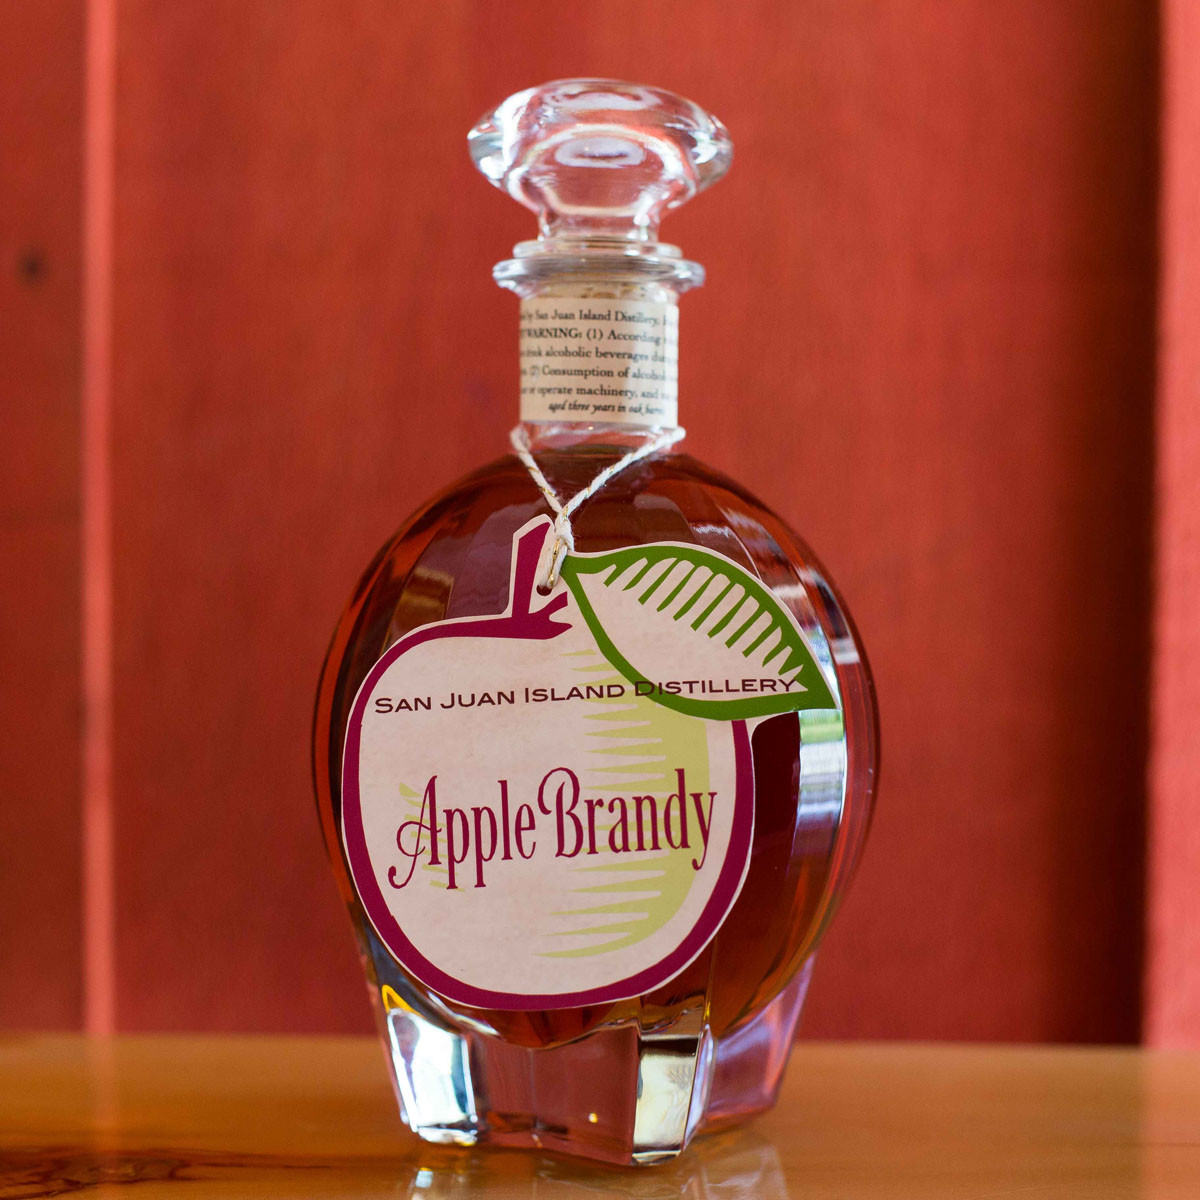 San Juan Island Distillery Apple Brandy in decanter